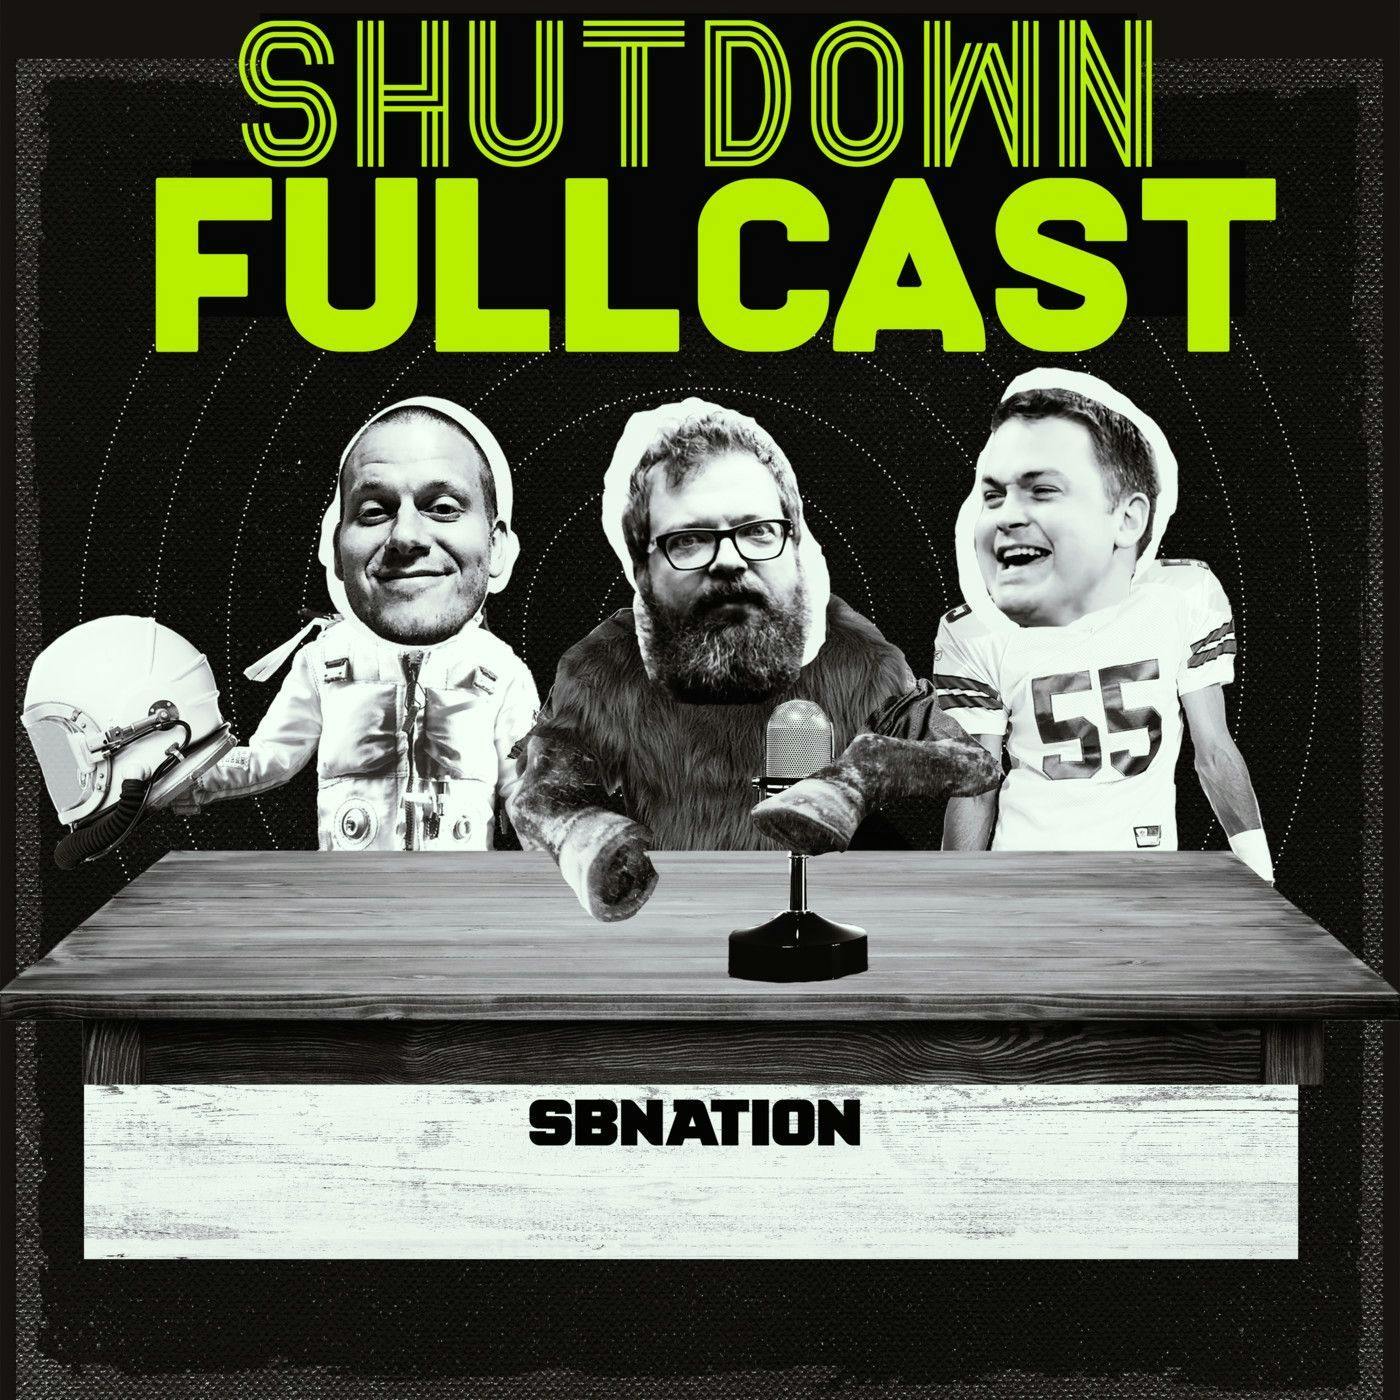 Shutdown Fullcast 40 for 40: The 2017 Gasparilla Bowl